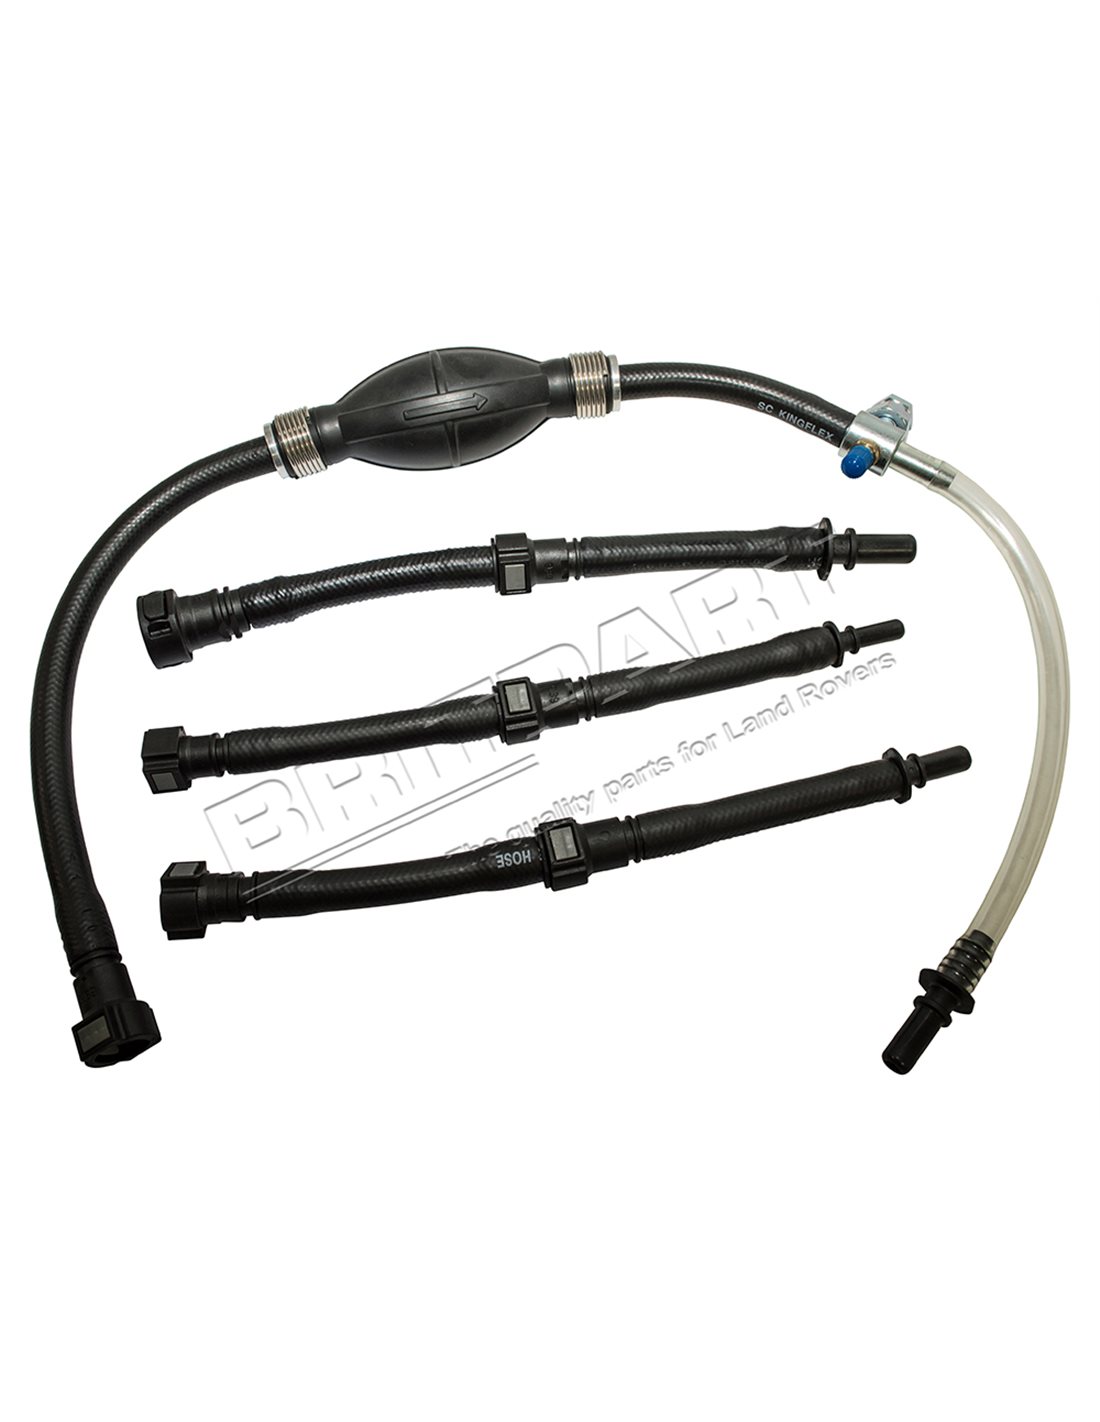 support de filtre a gasoil pompe amorçage carburant – Garage 4X4 Balleydier